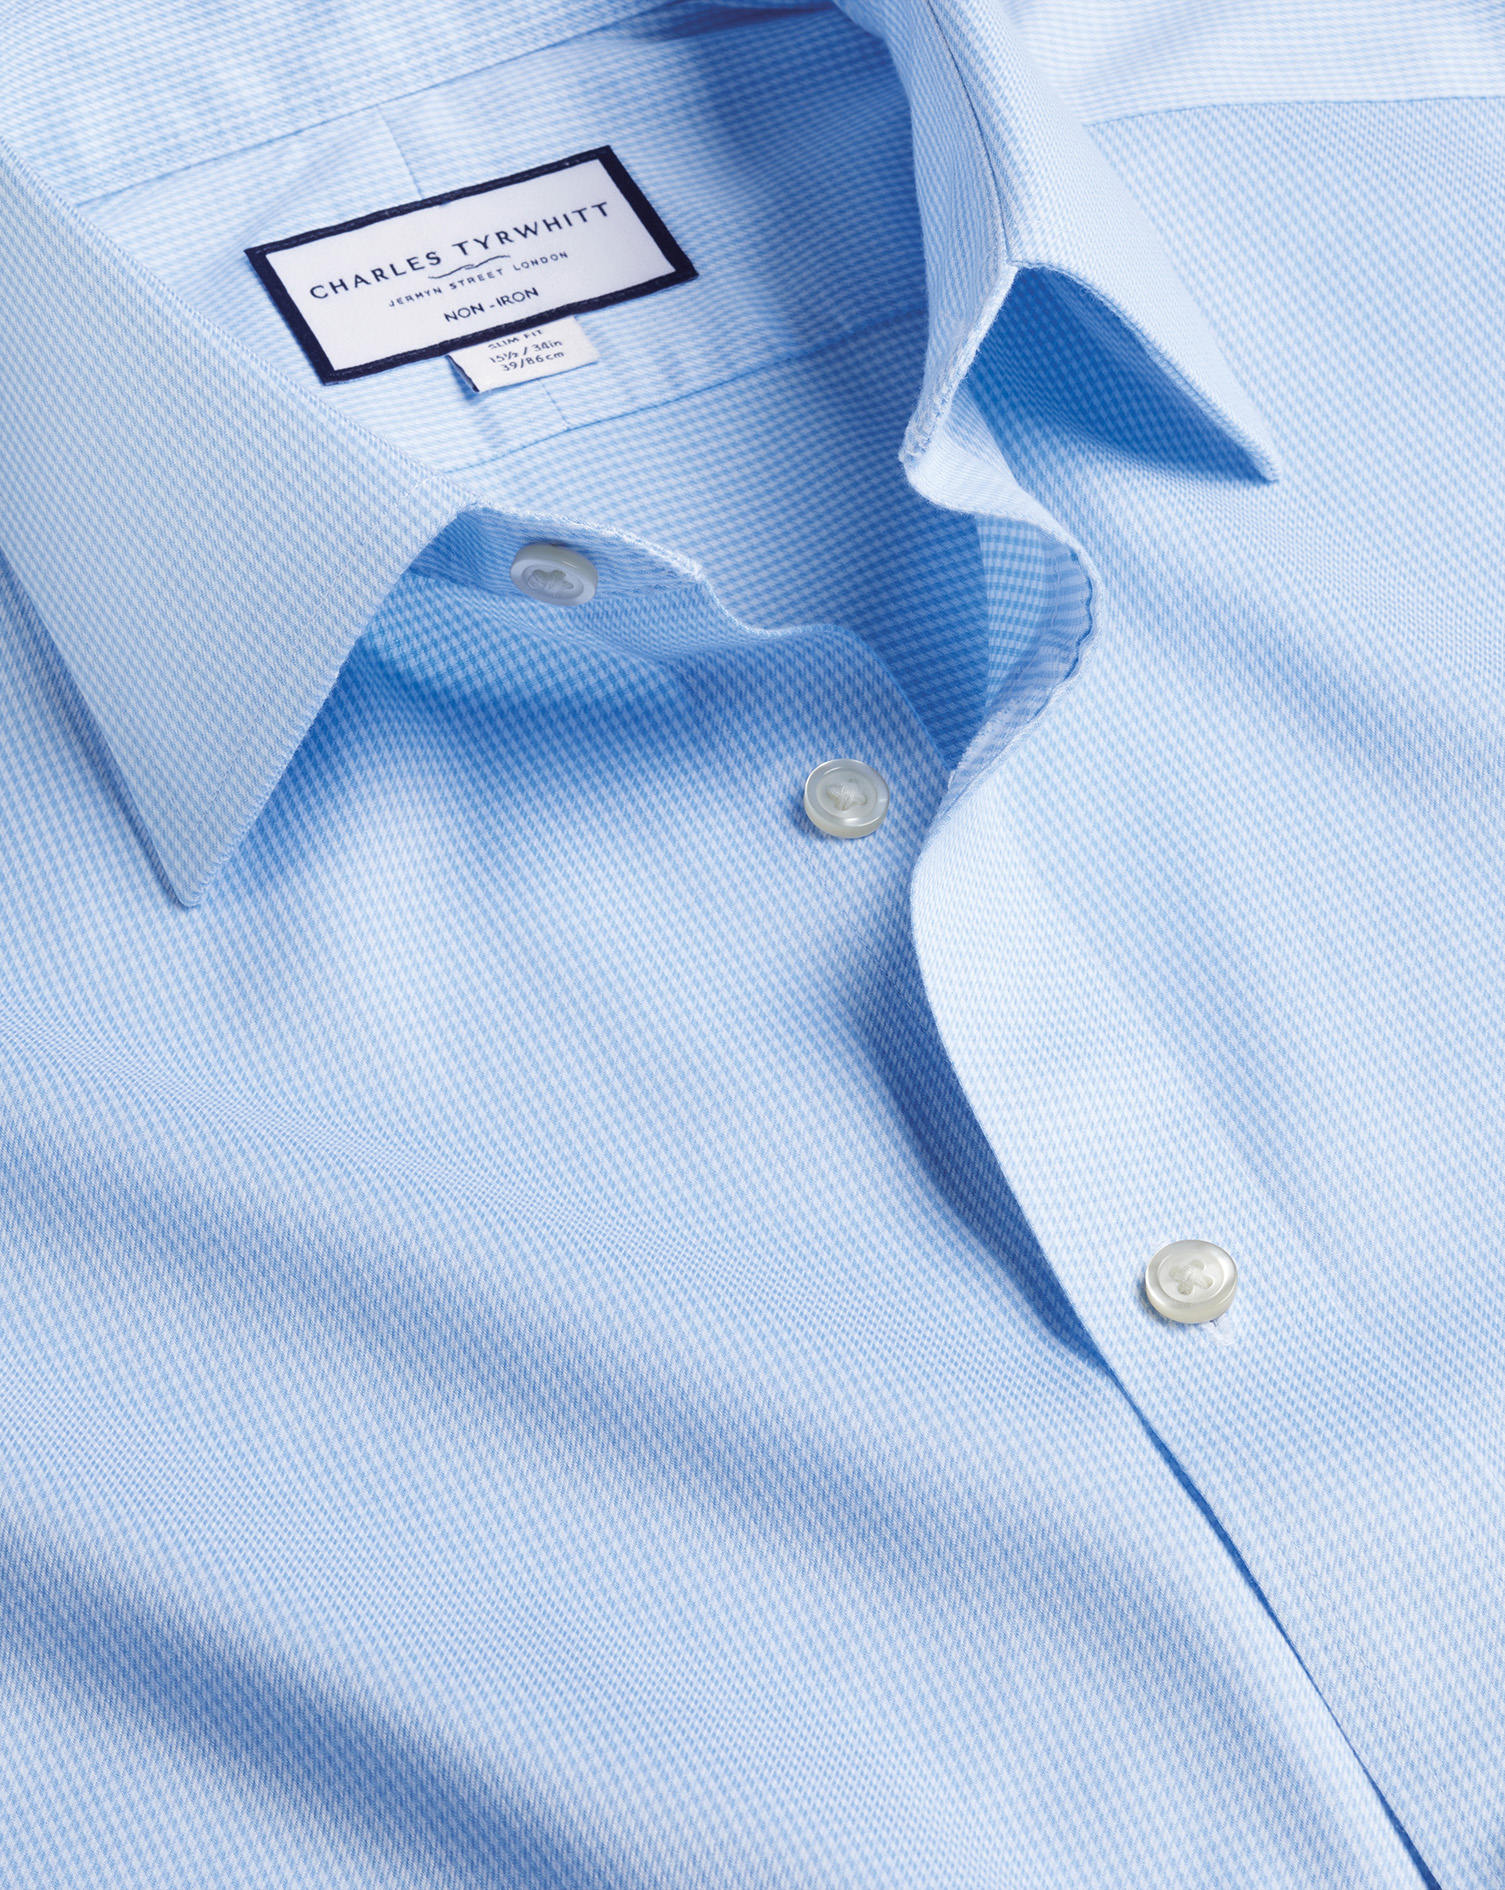 Men's Charles Tyrwhitt Non-Iron Puppytooth Dress Shirt - Sky Blue Single Cuff Size Large Cotton
